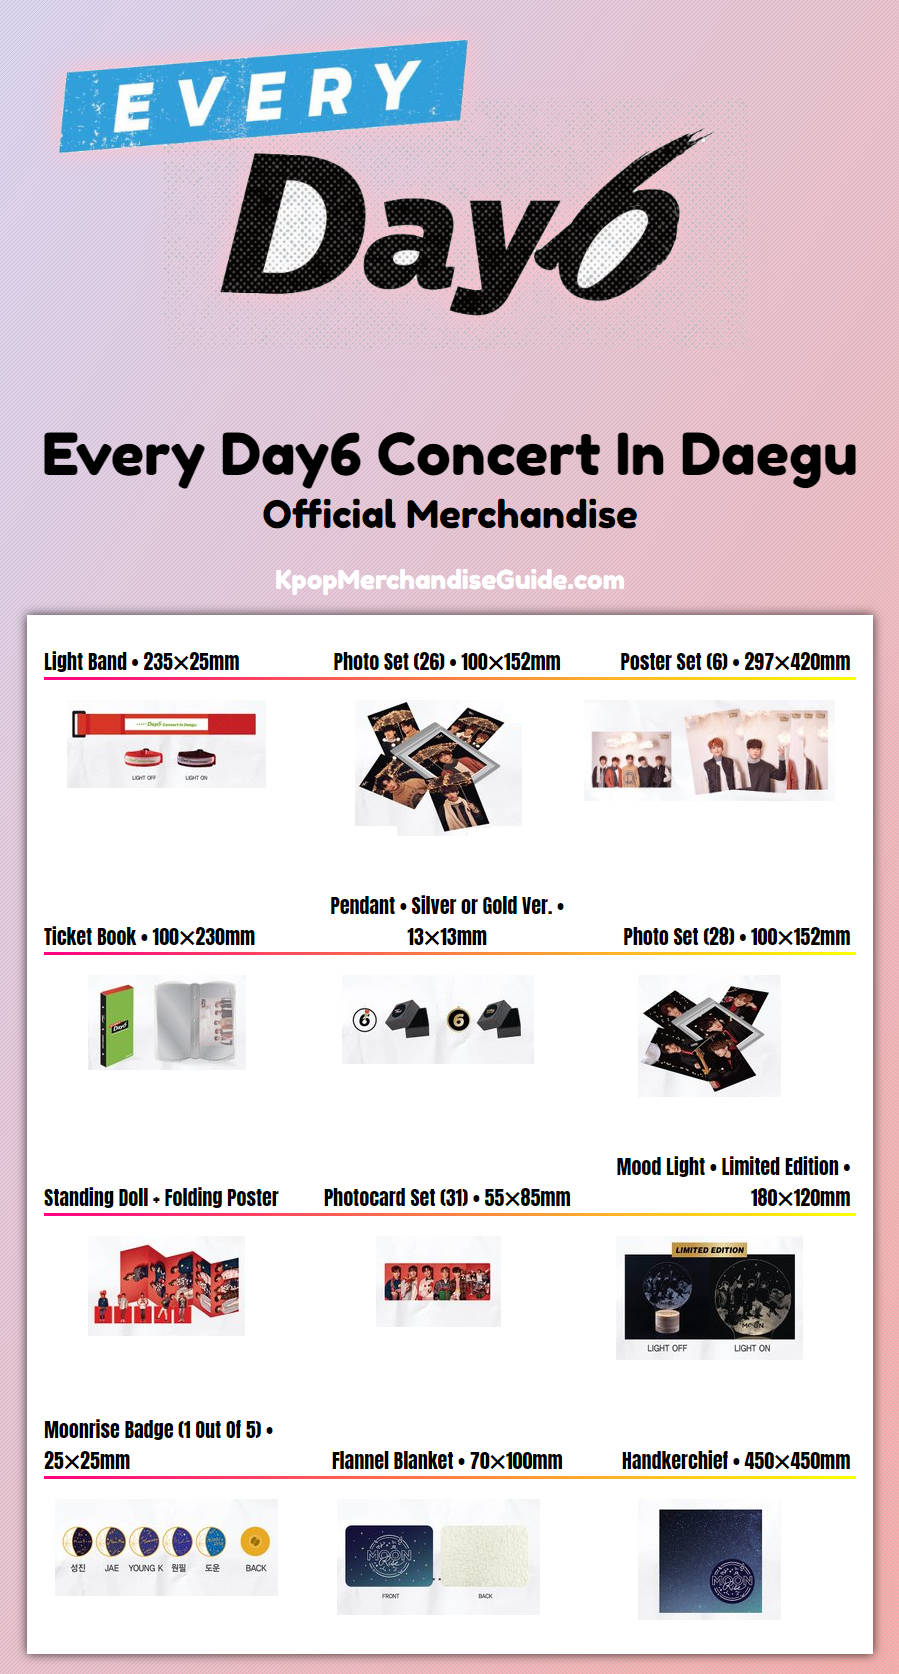 Every Day6 Concert In Daegu Merchandise